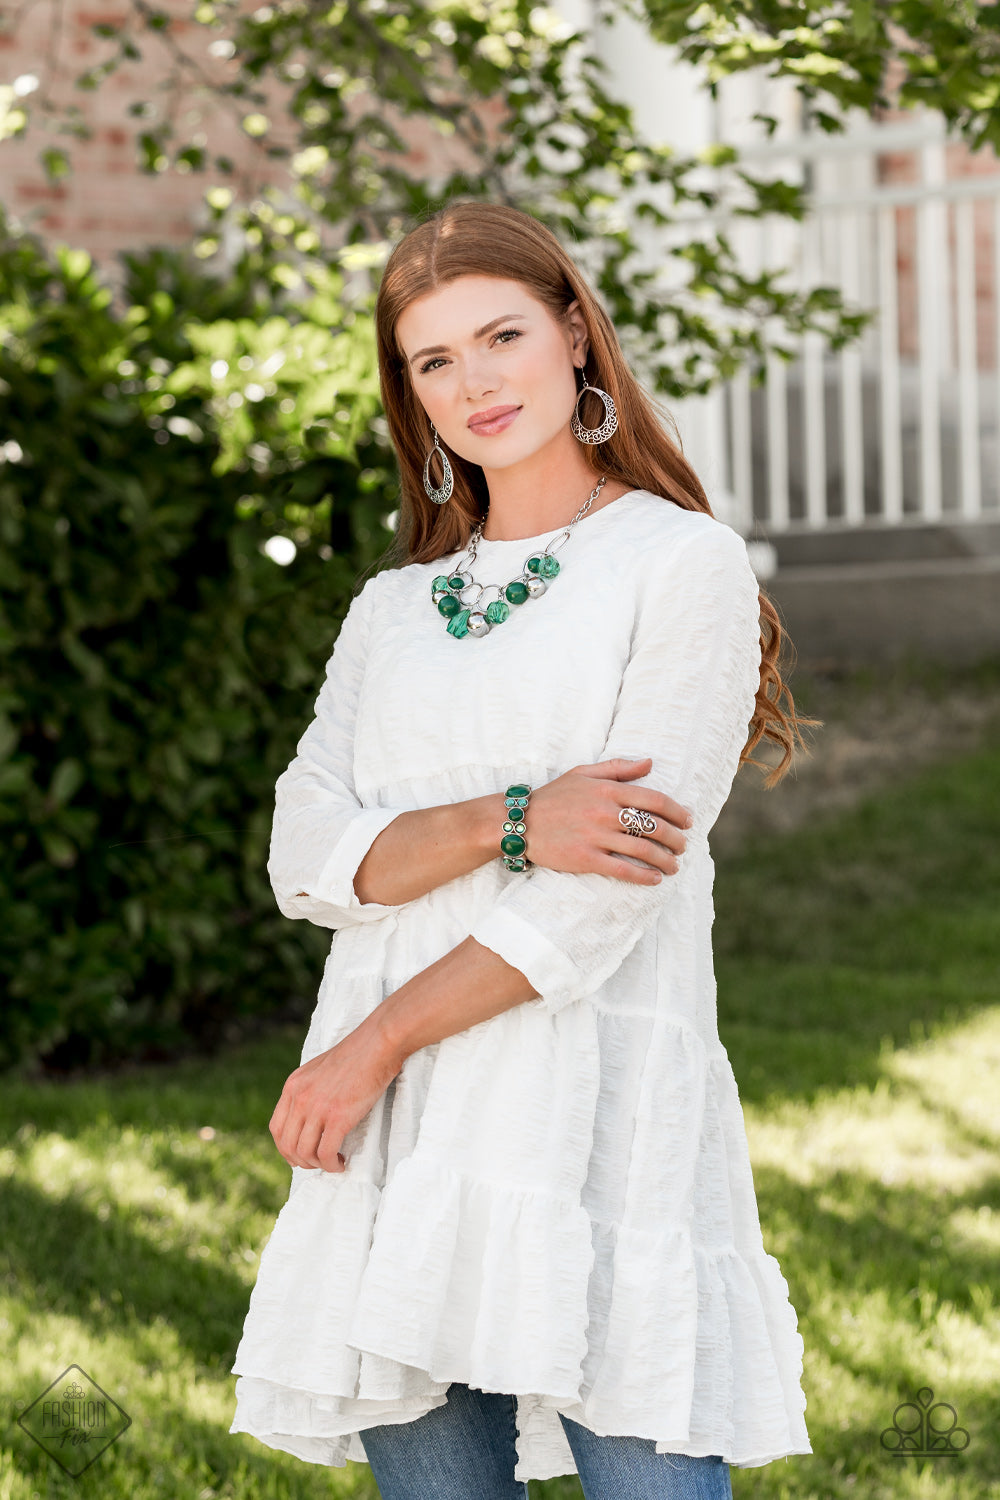 Green Jewelry - Glimpses of Malibu - September's Fashion Fix 2020  Paparazzi jewelry image